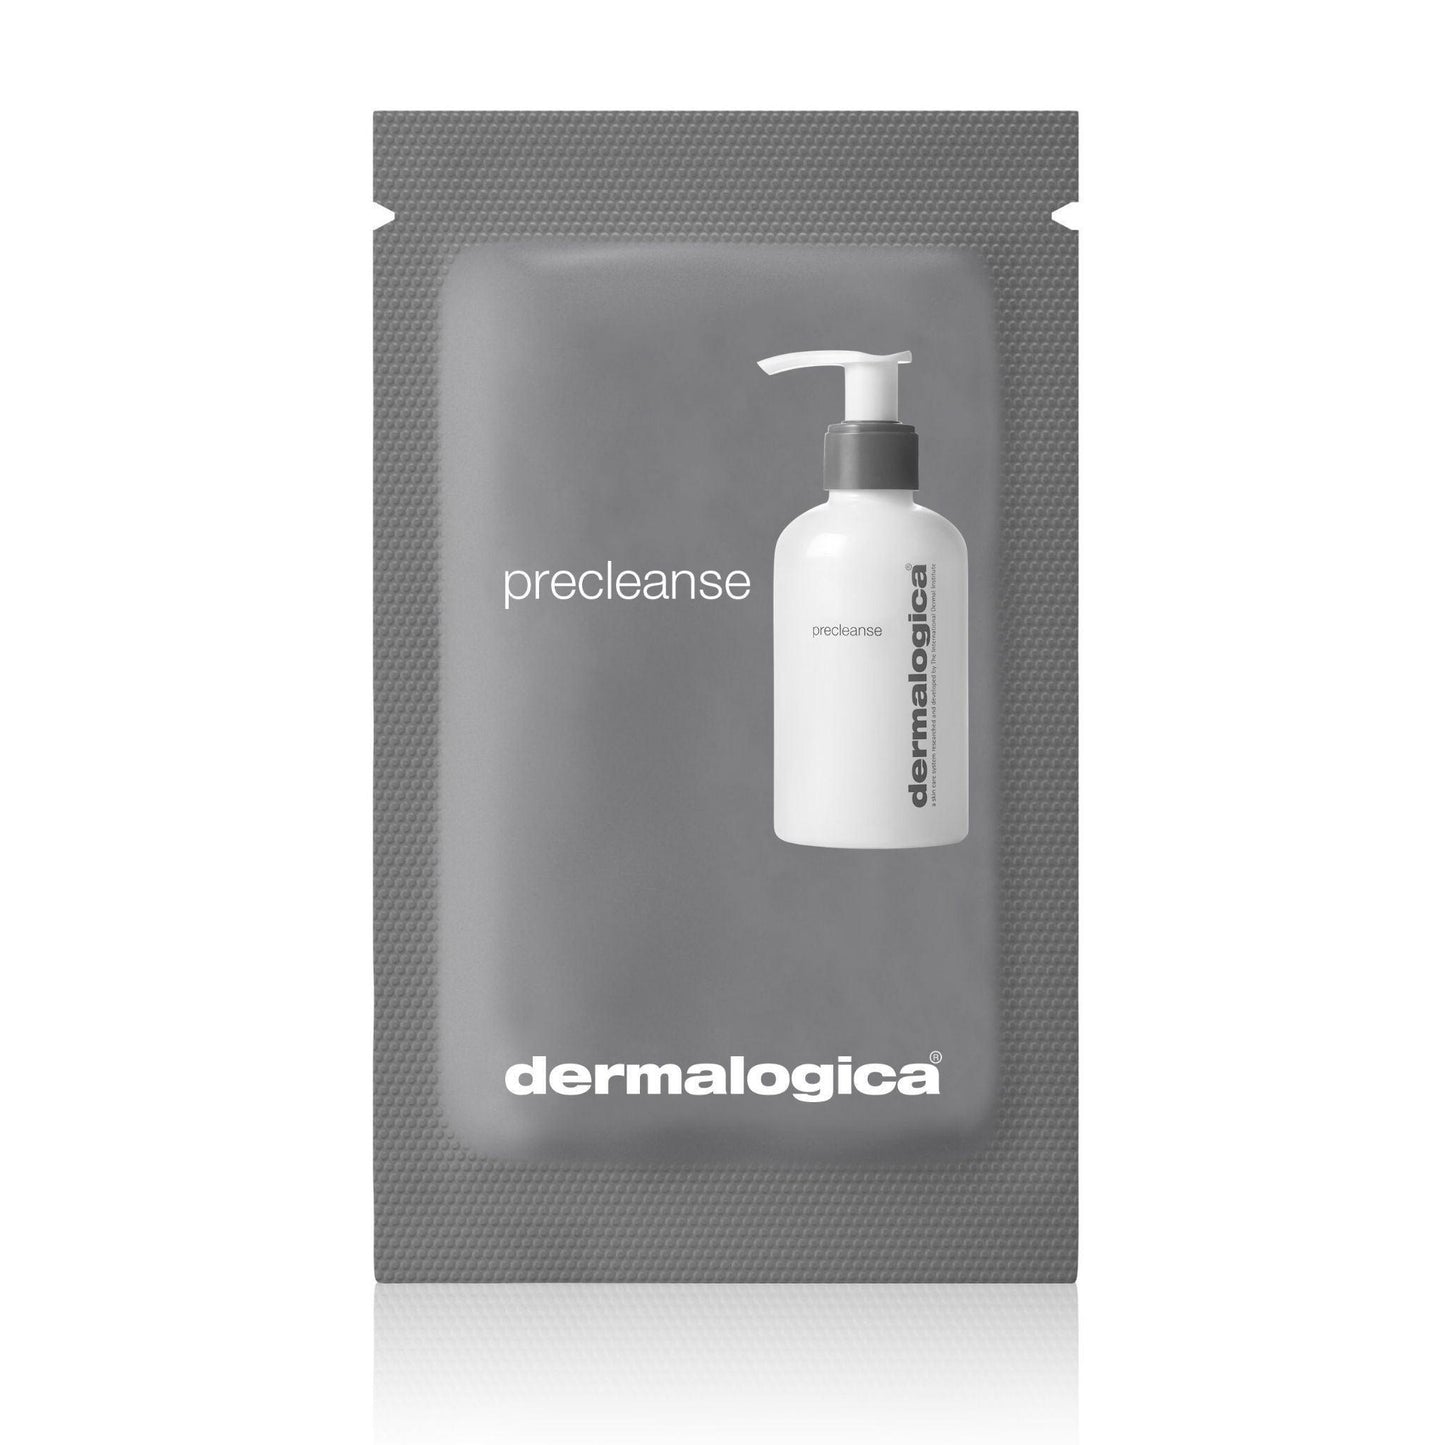 precleanse (sample) - Dermalogica Singapore